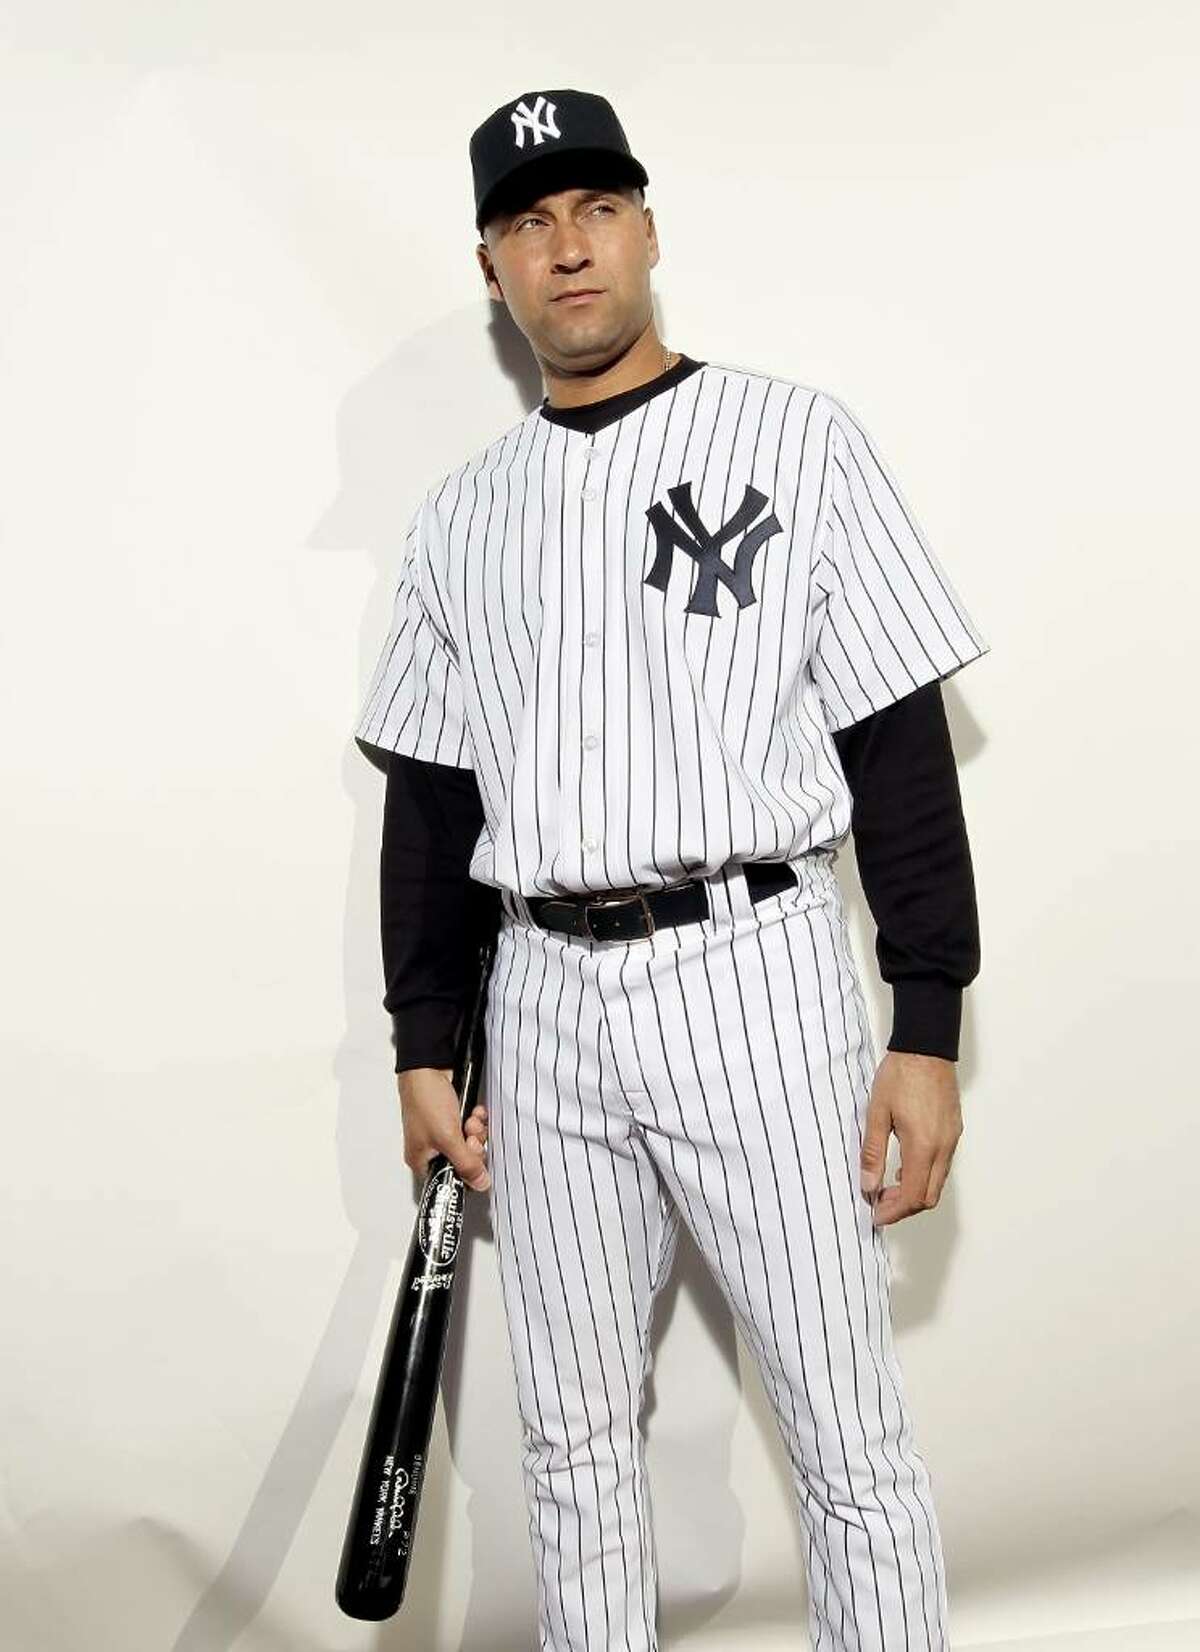 Slideshow: The New York Yankees 2010 portraits